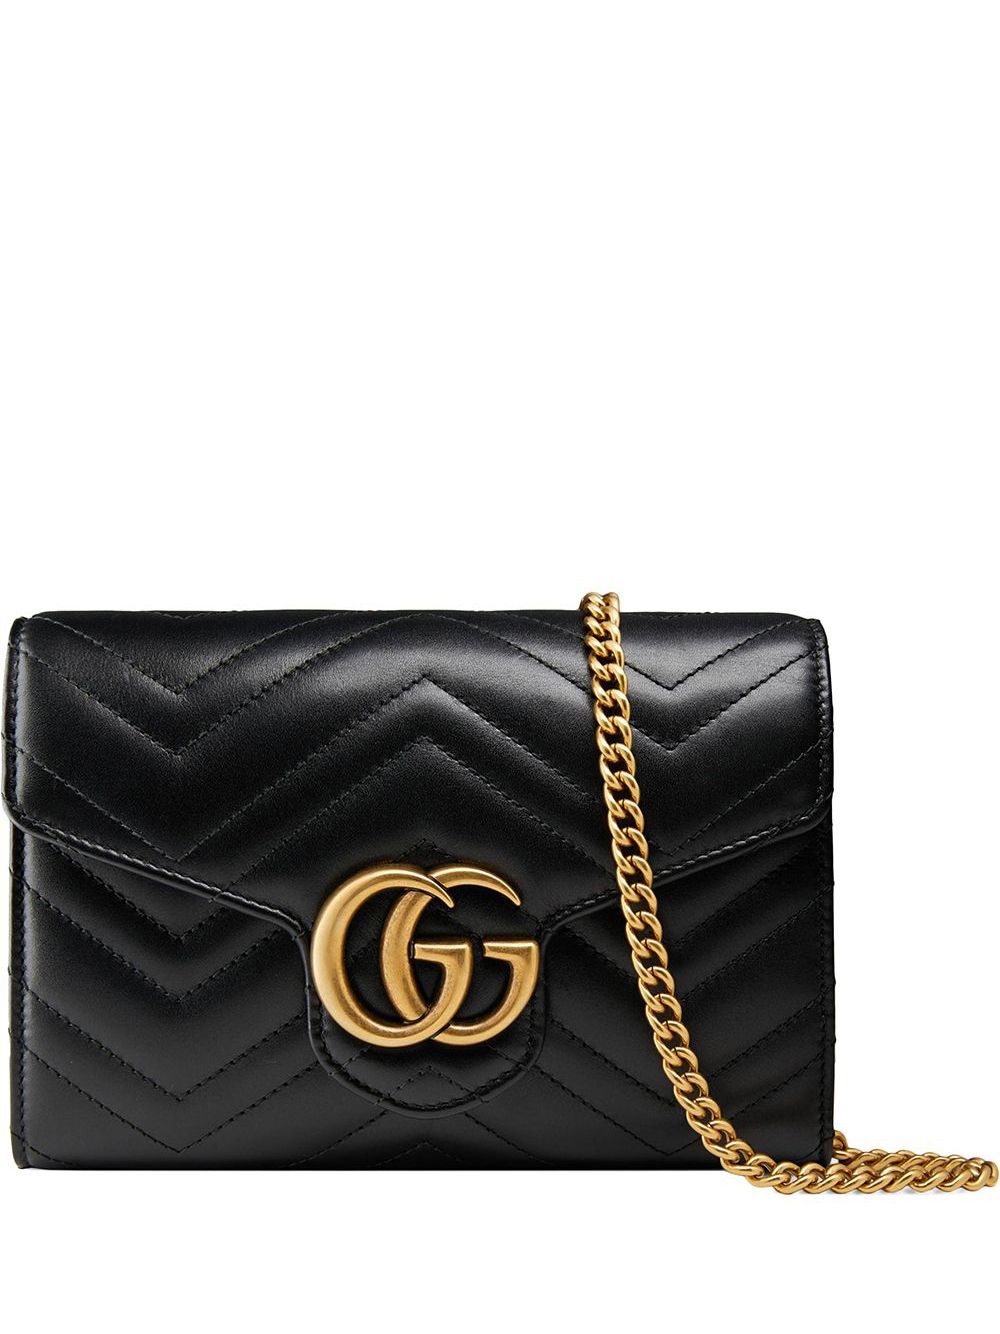 Shop black Gucci GG Marmont mini bag 